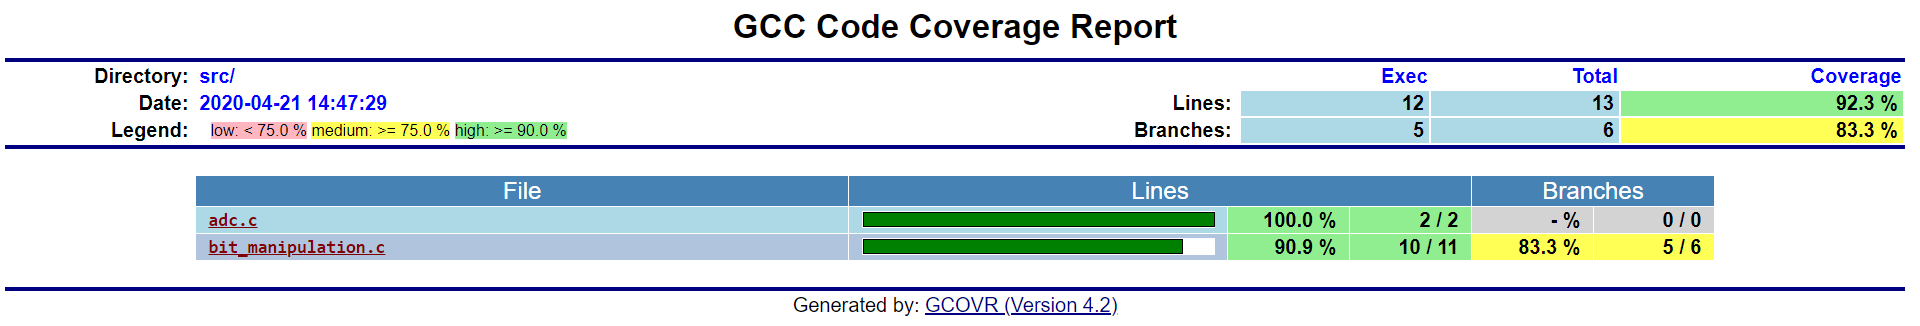 GCC Code Coverage Report